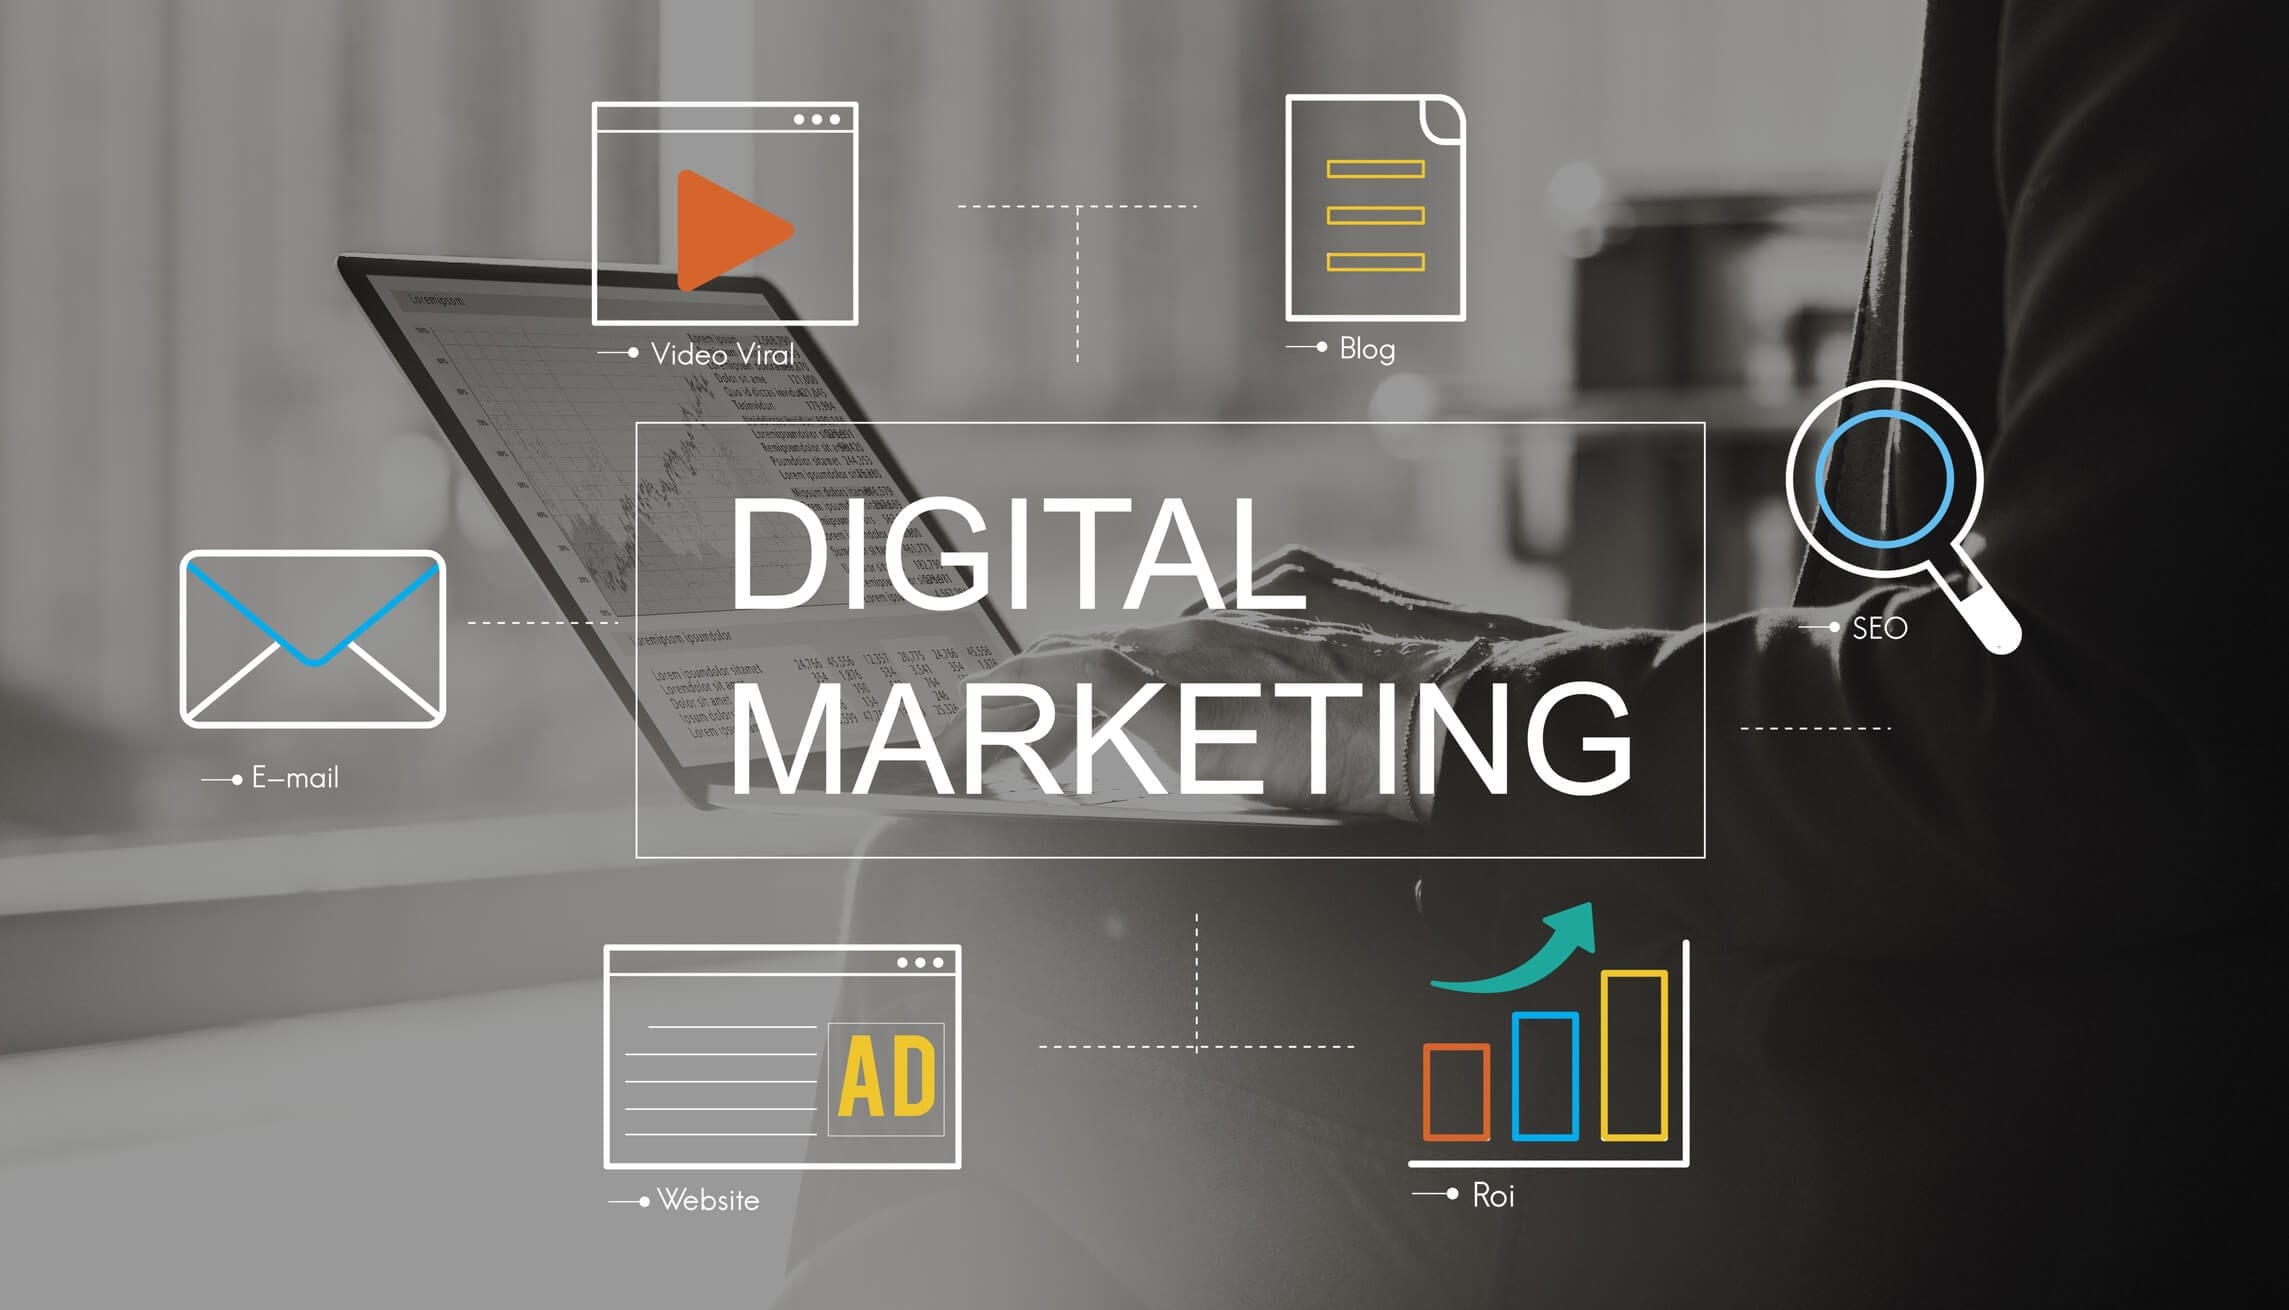 Digital Marketing Trends For 2021